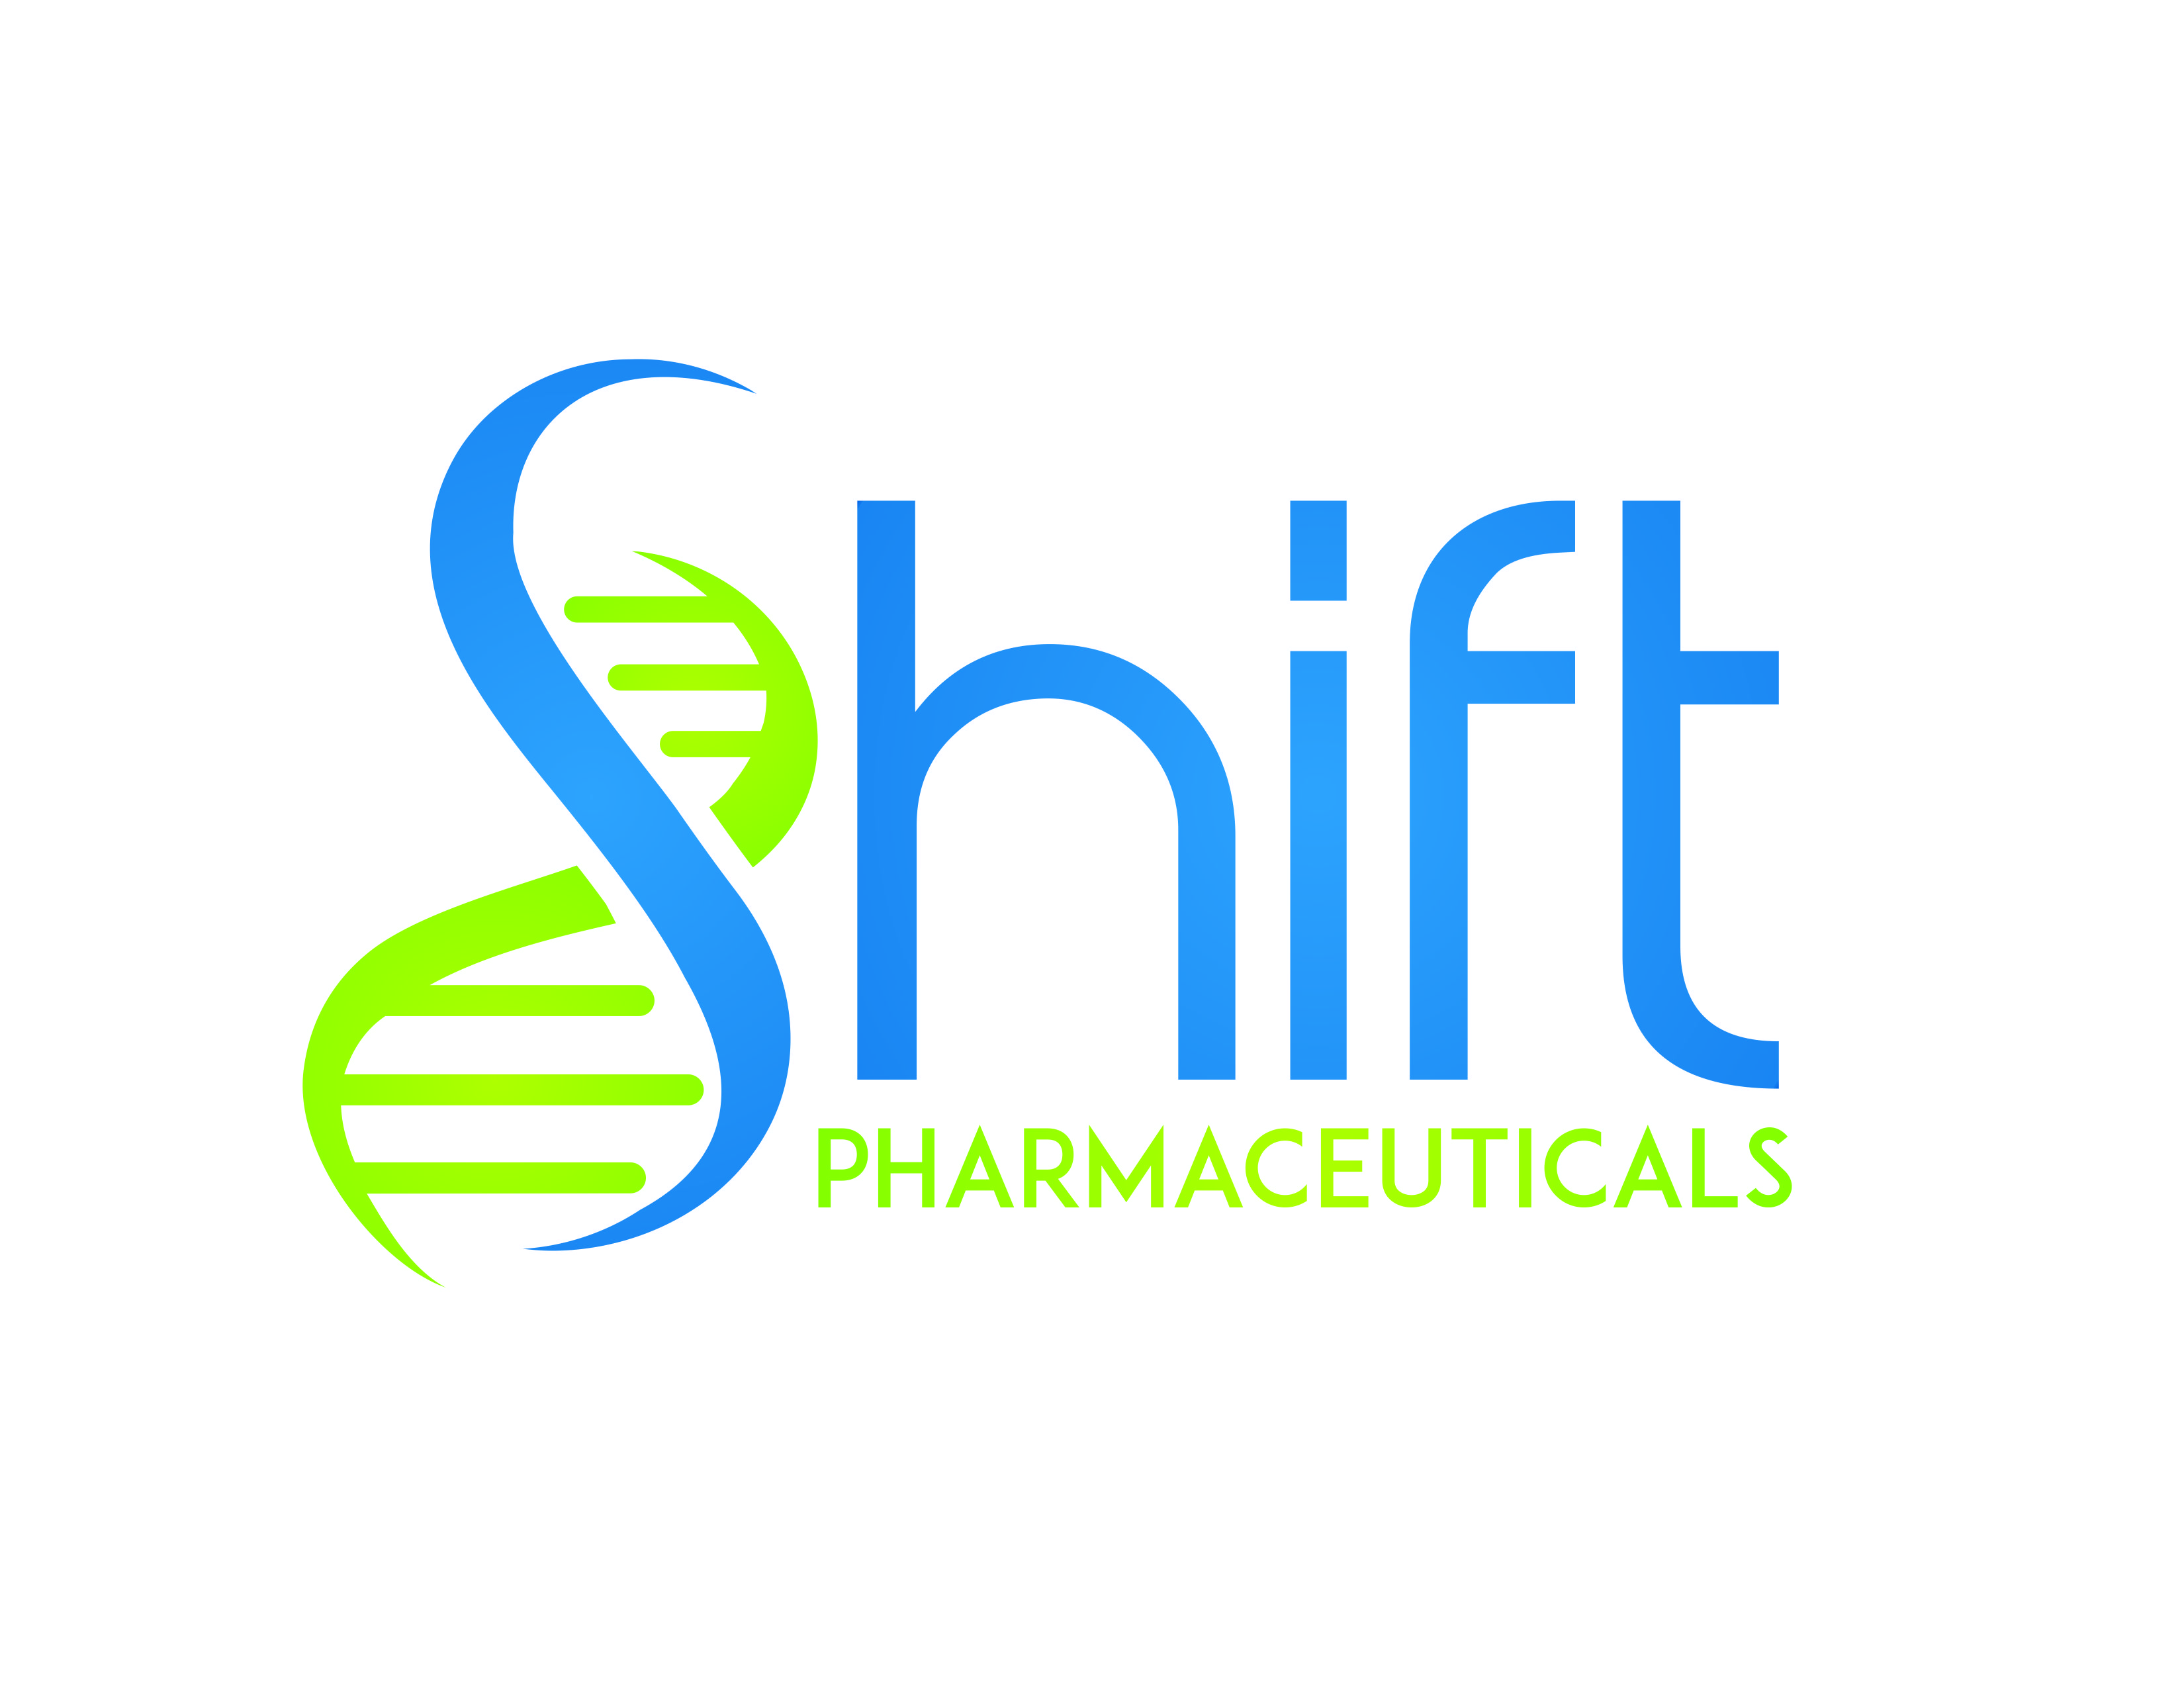 FDA grants Orphan Drug status for Shift’s lead compound for SMA